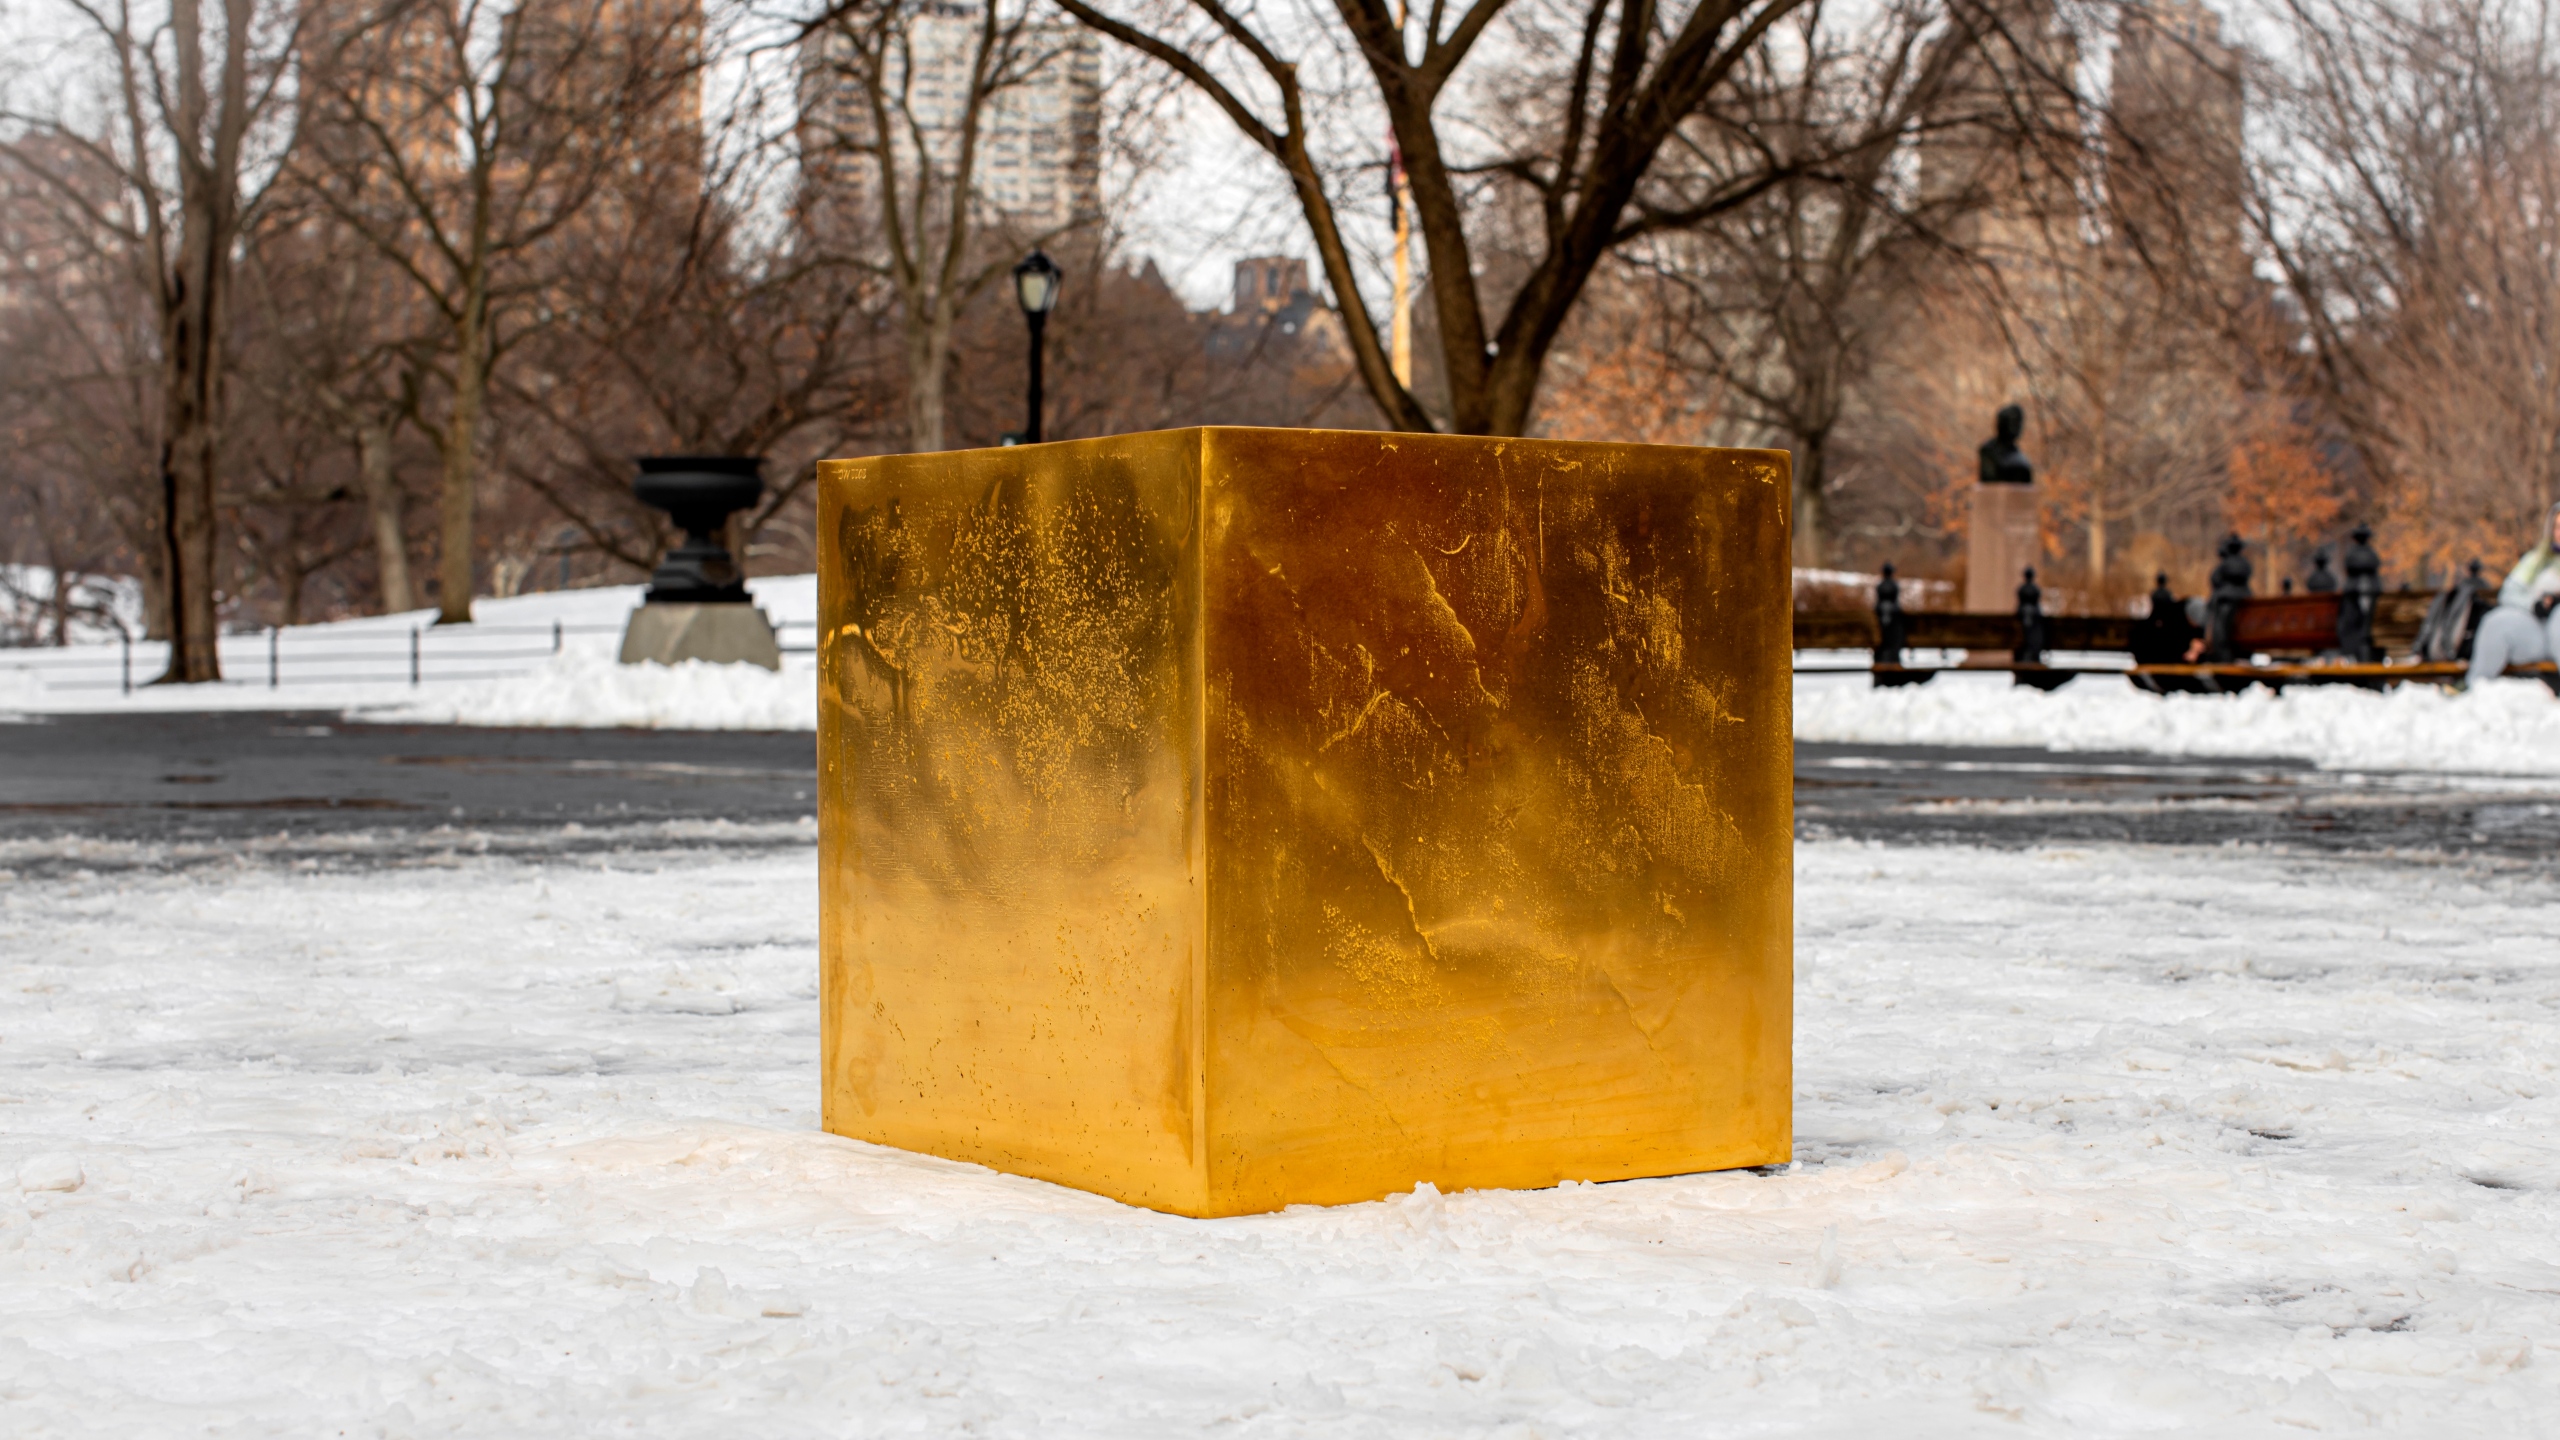 Sýr nad zlato. Milionovou kostku zlata v Central Parku nahradil dvoumetrový blok mléčného výrobku